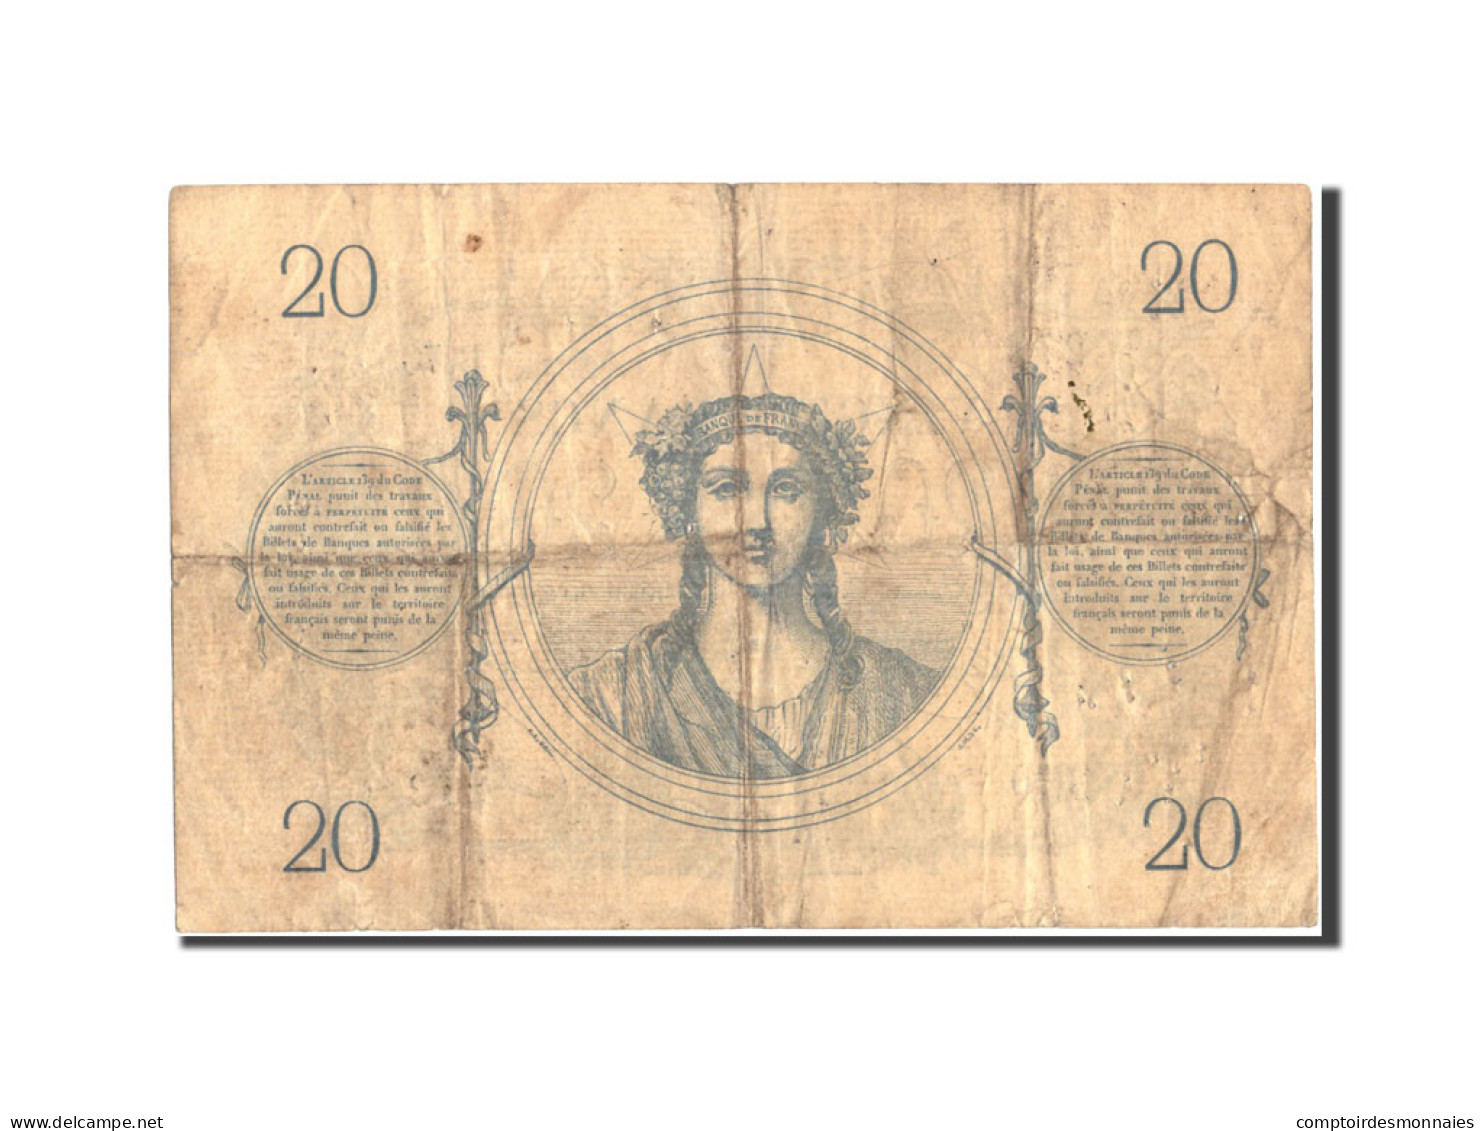 Billet, France, 20 Francs, ...-1889 Circulated During XIXth, 1871, 1871-05-09 - ...-1889 Francs Im 19. Jh.